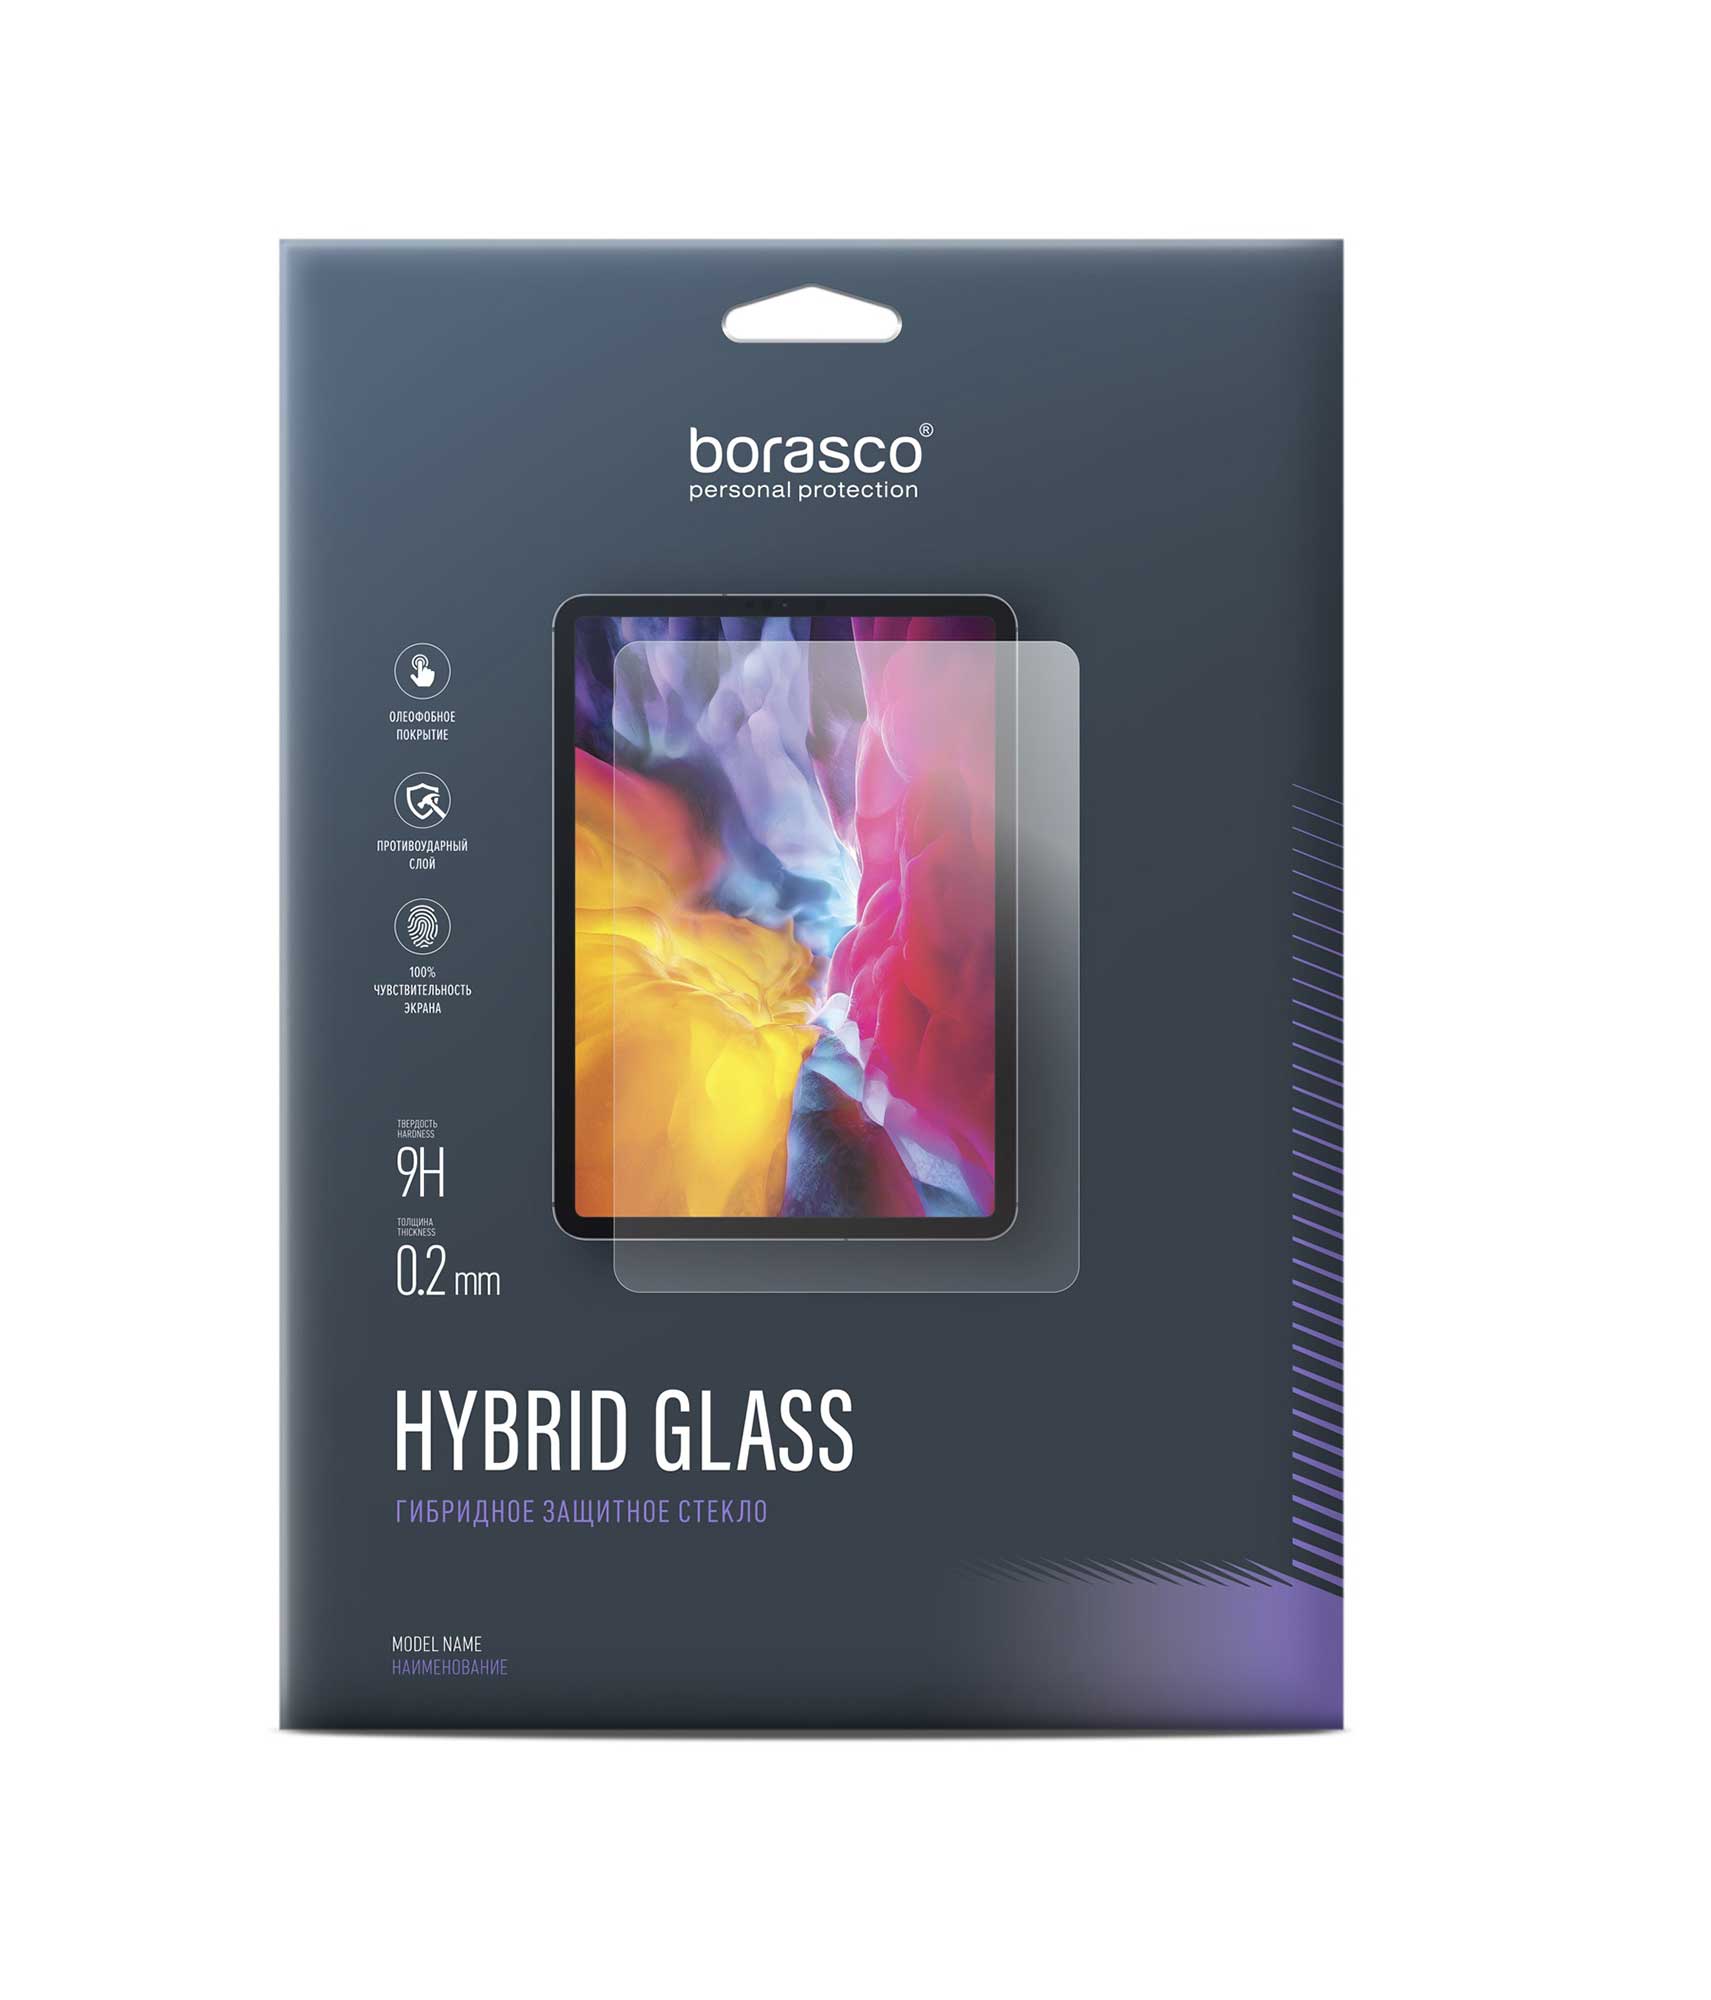 Защитное стекло Hybrid Glass для Apple iPad Pro 11 (2021) стекло защитное borasco hybrid glass apple ipad pro 2021 11 прозрачное